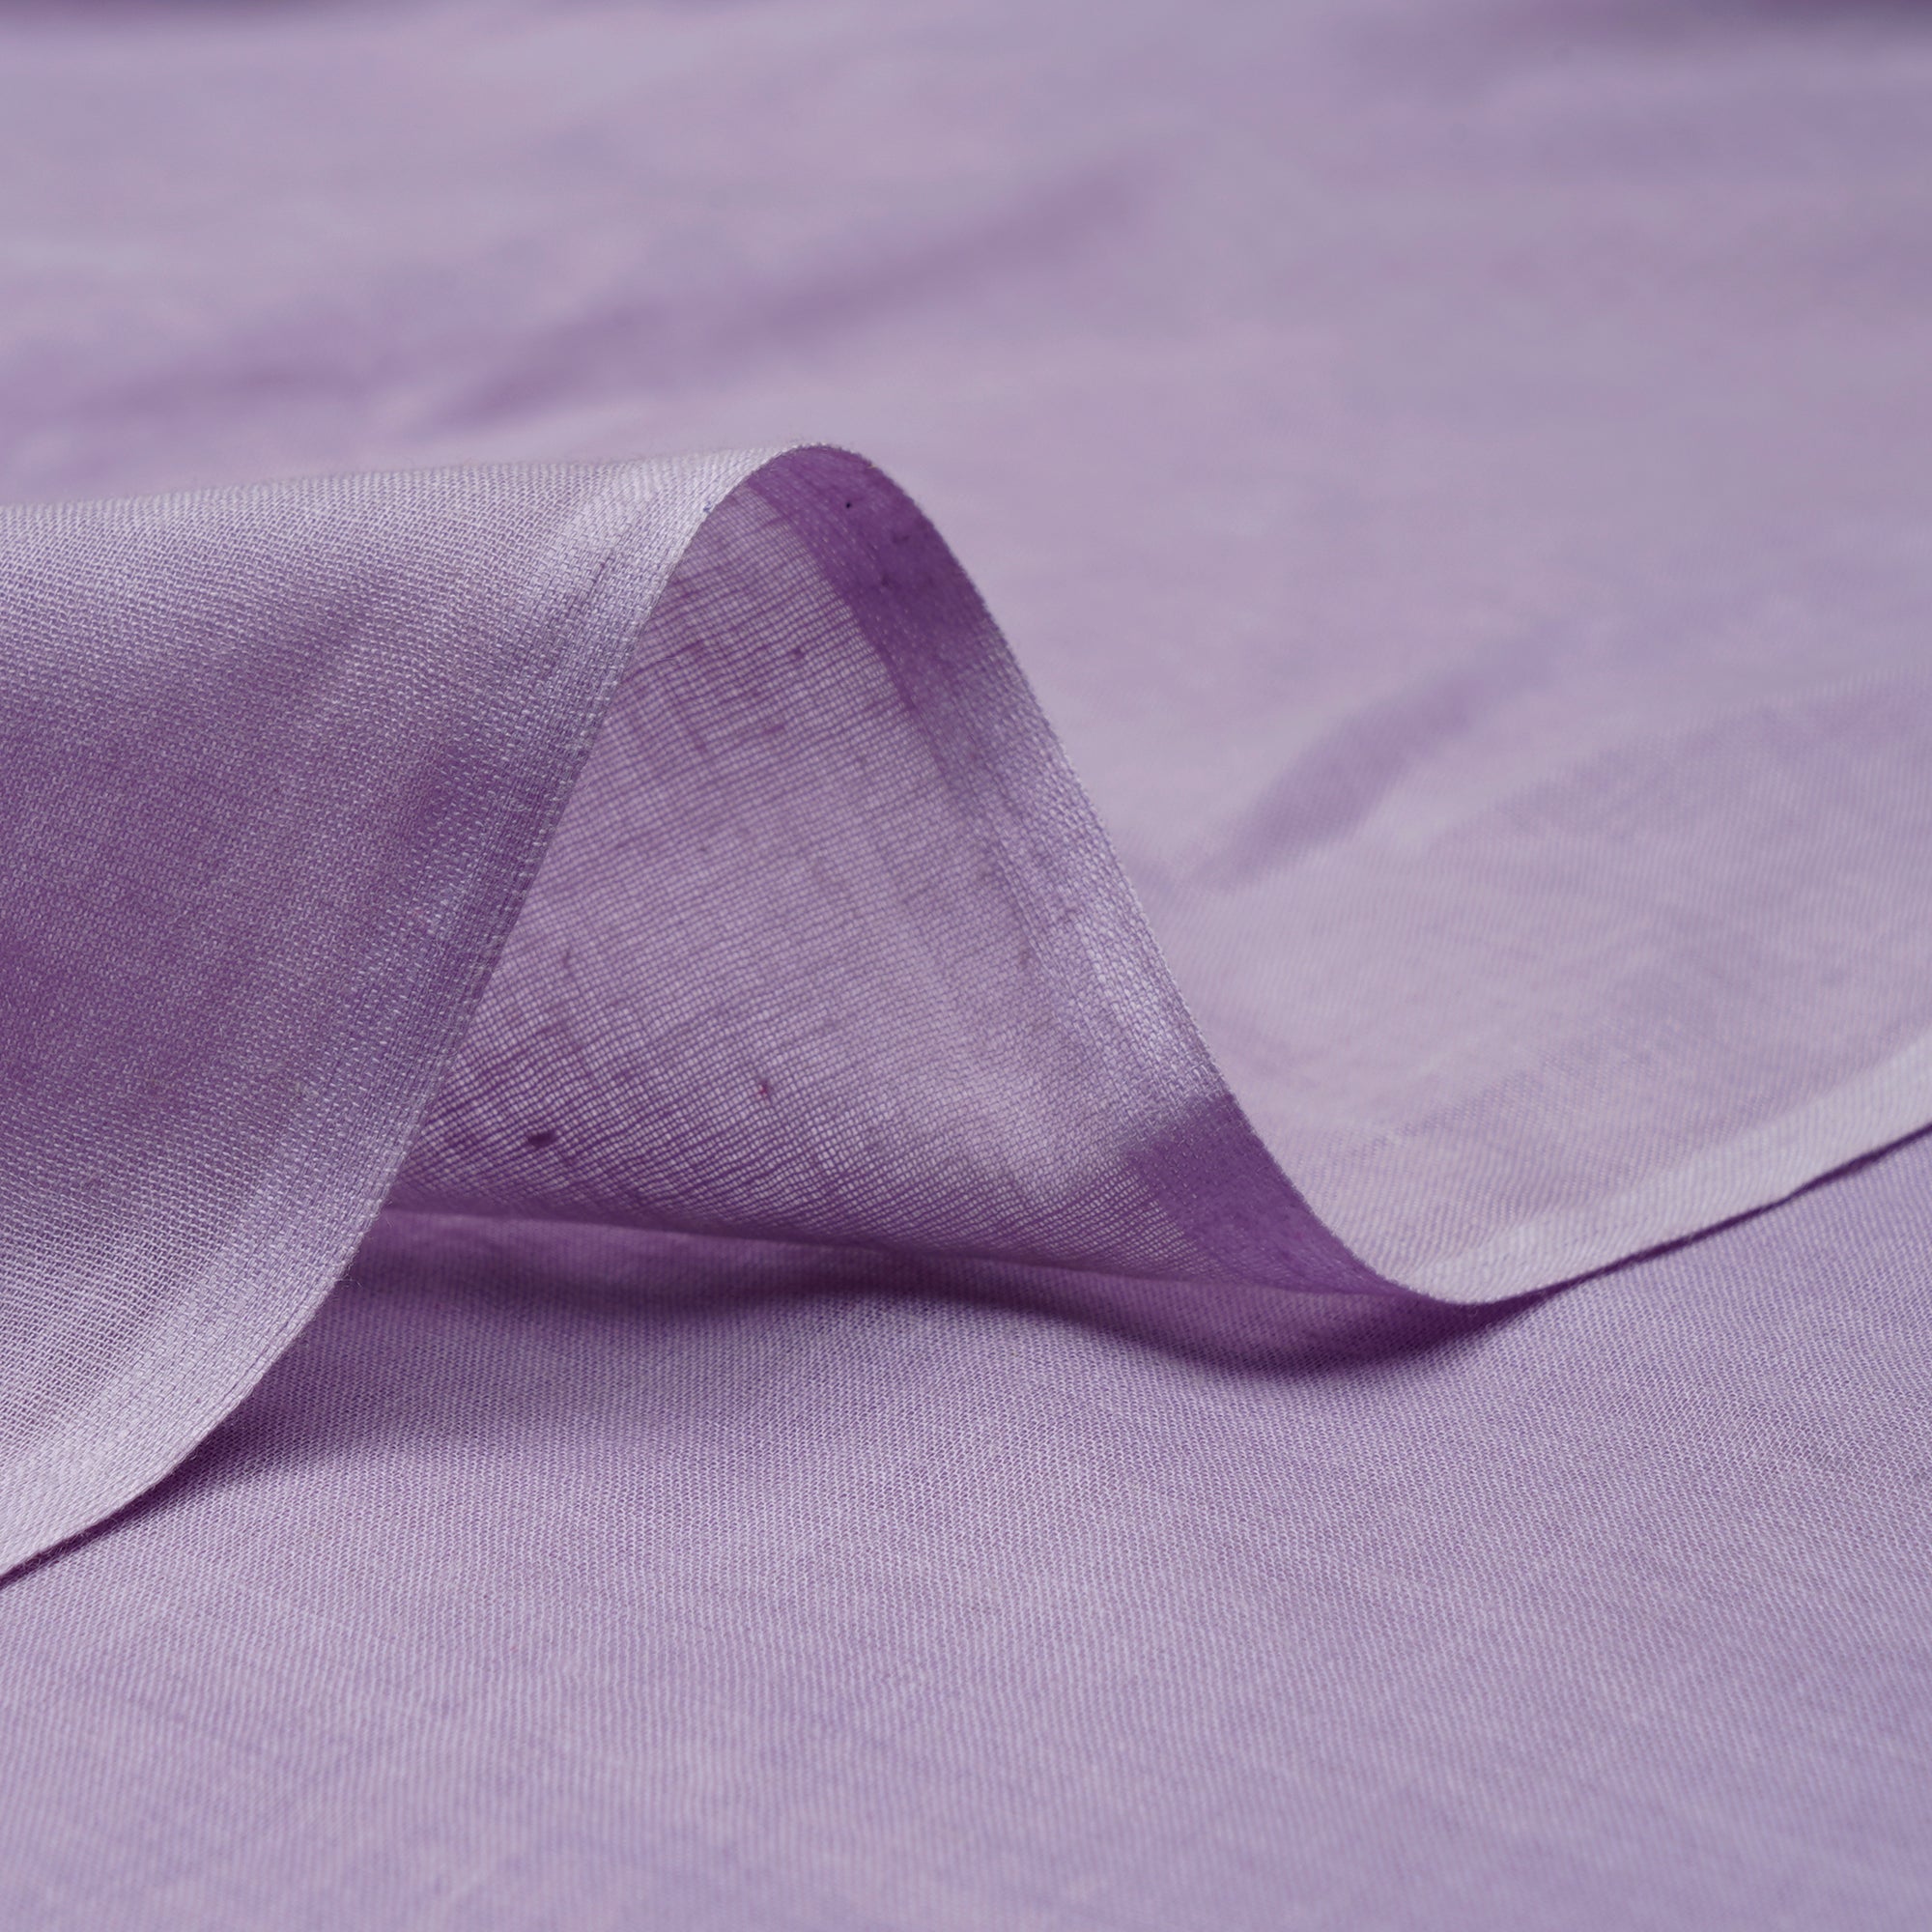 Lavender Piece Dyed Cotton Voile Fabric